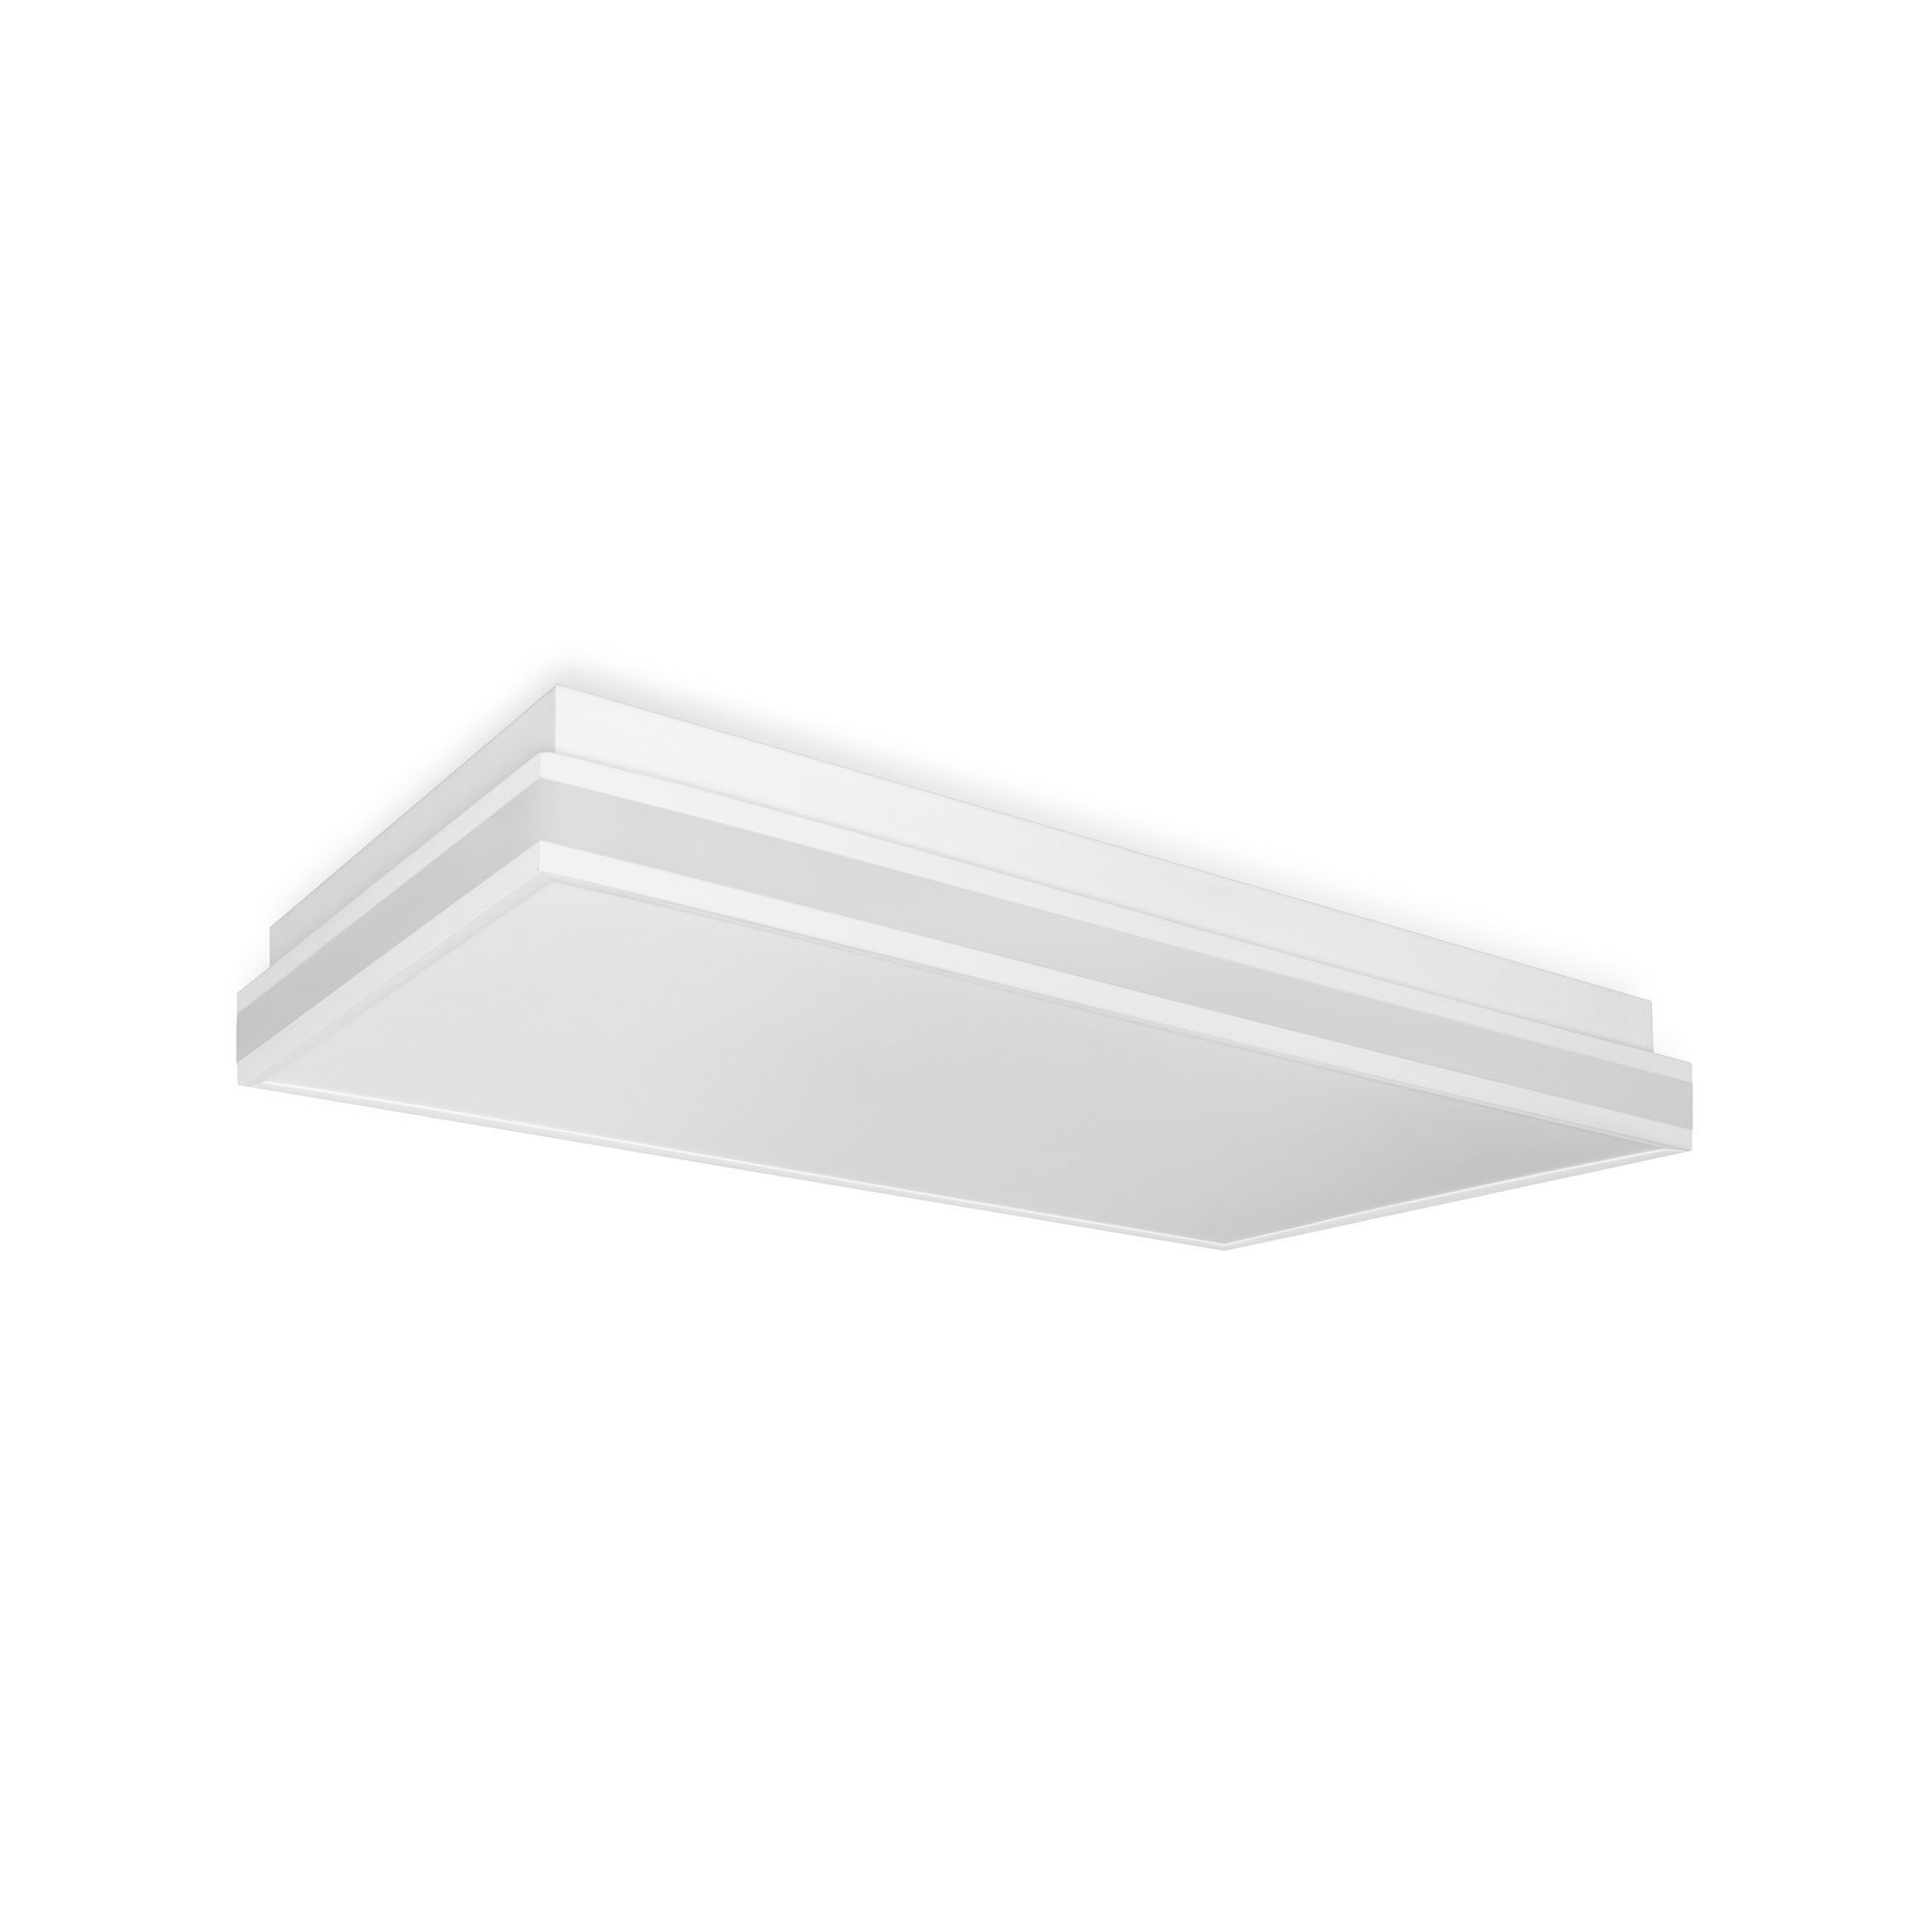 LEDVANCE SMART+ WiFi Tunable White LED Ceiling Light ORBIS MAGNET 600x300mm white 4200lm